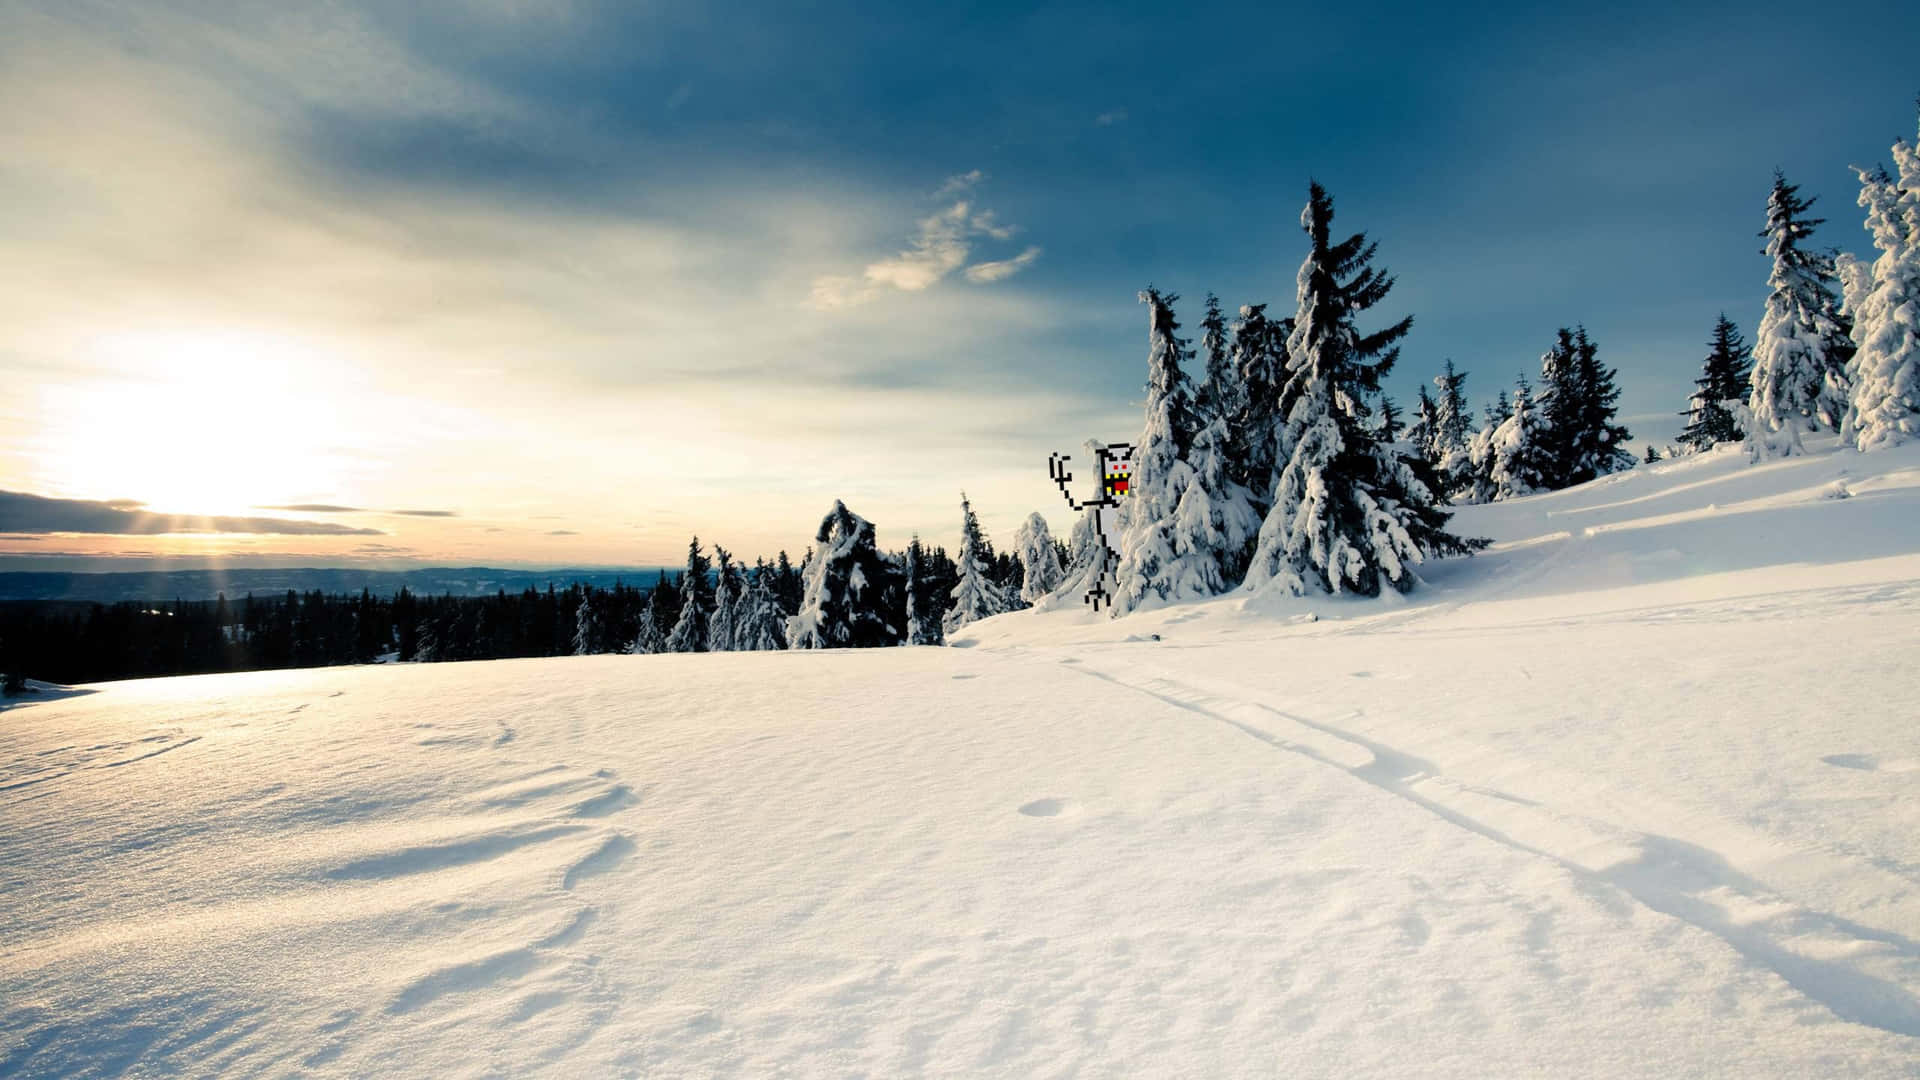 Enchanting Snowy Forest in Winter Wonderland Wallpaper